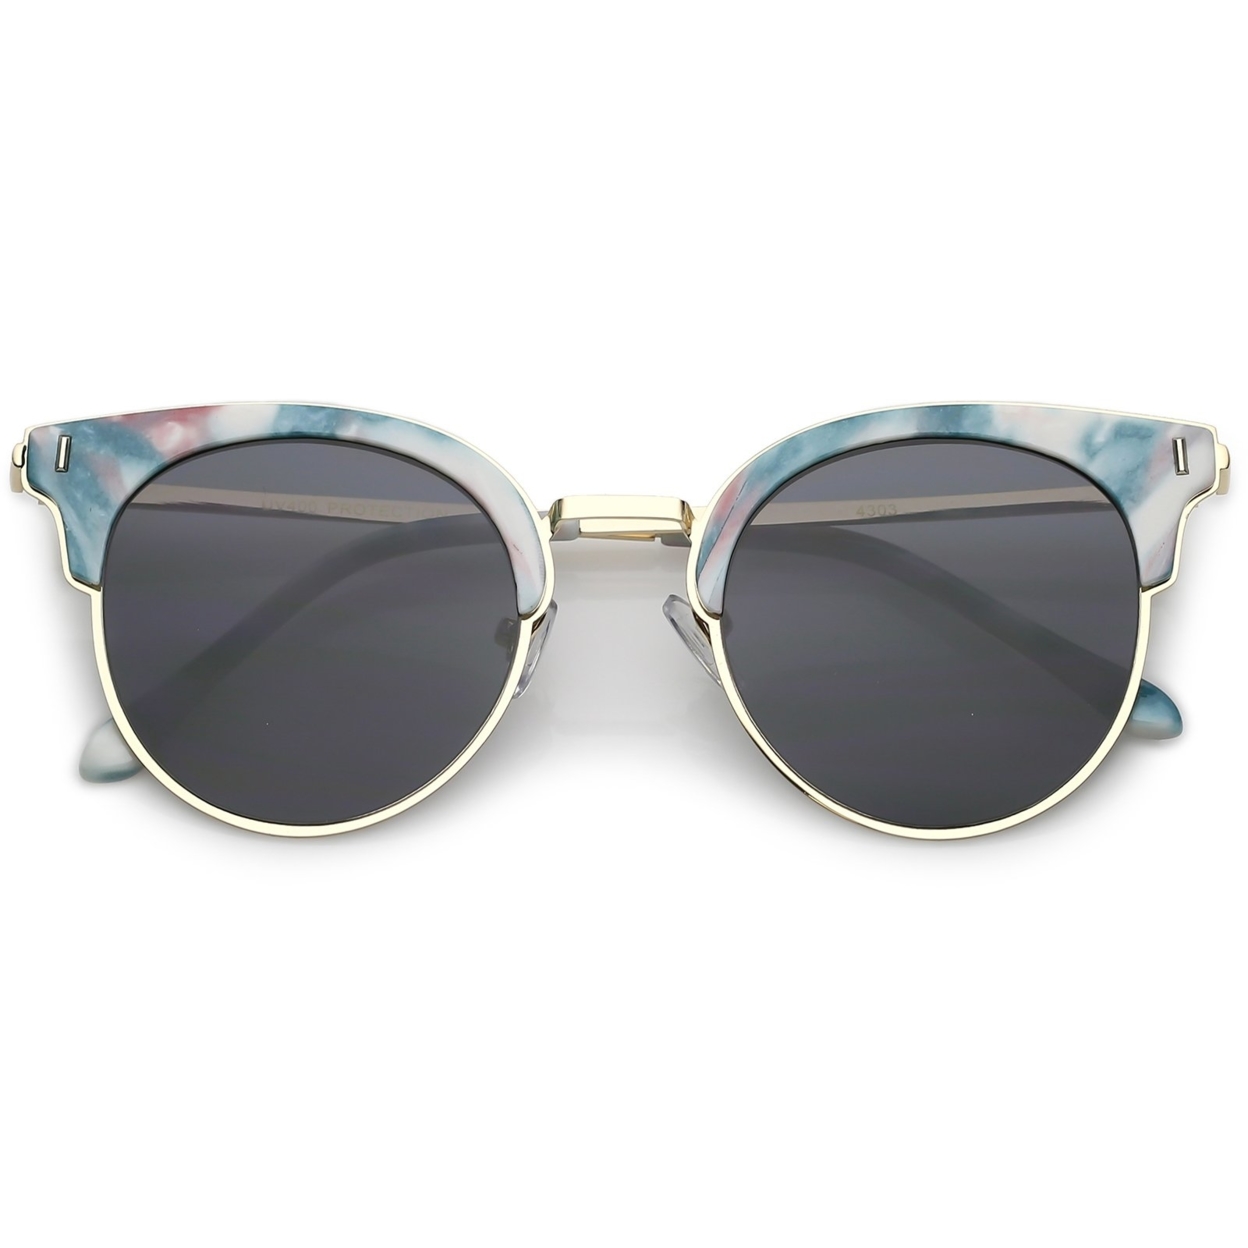 Semi Rimless Marble Print Round Cat Eye Sunglasses With Flat Lens 48mm - Black Gray Silver / Smoke